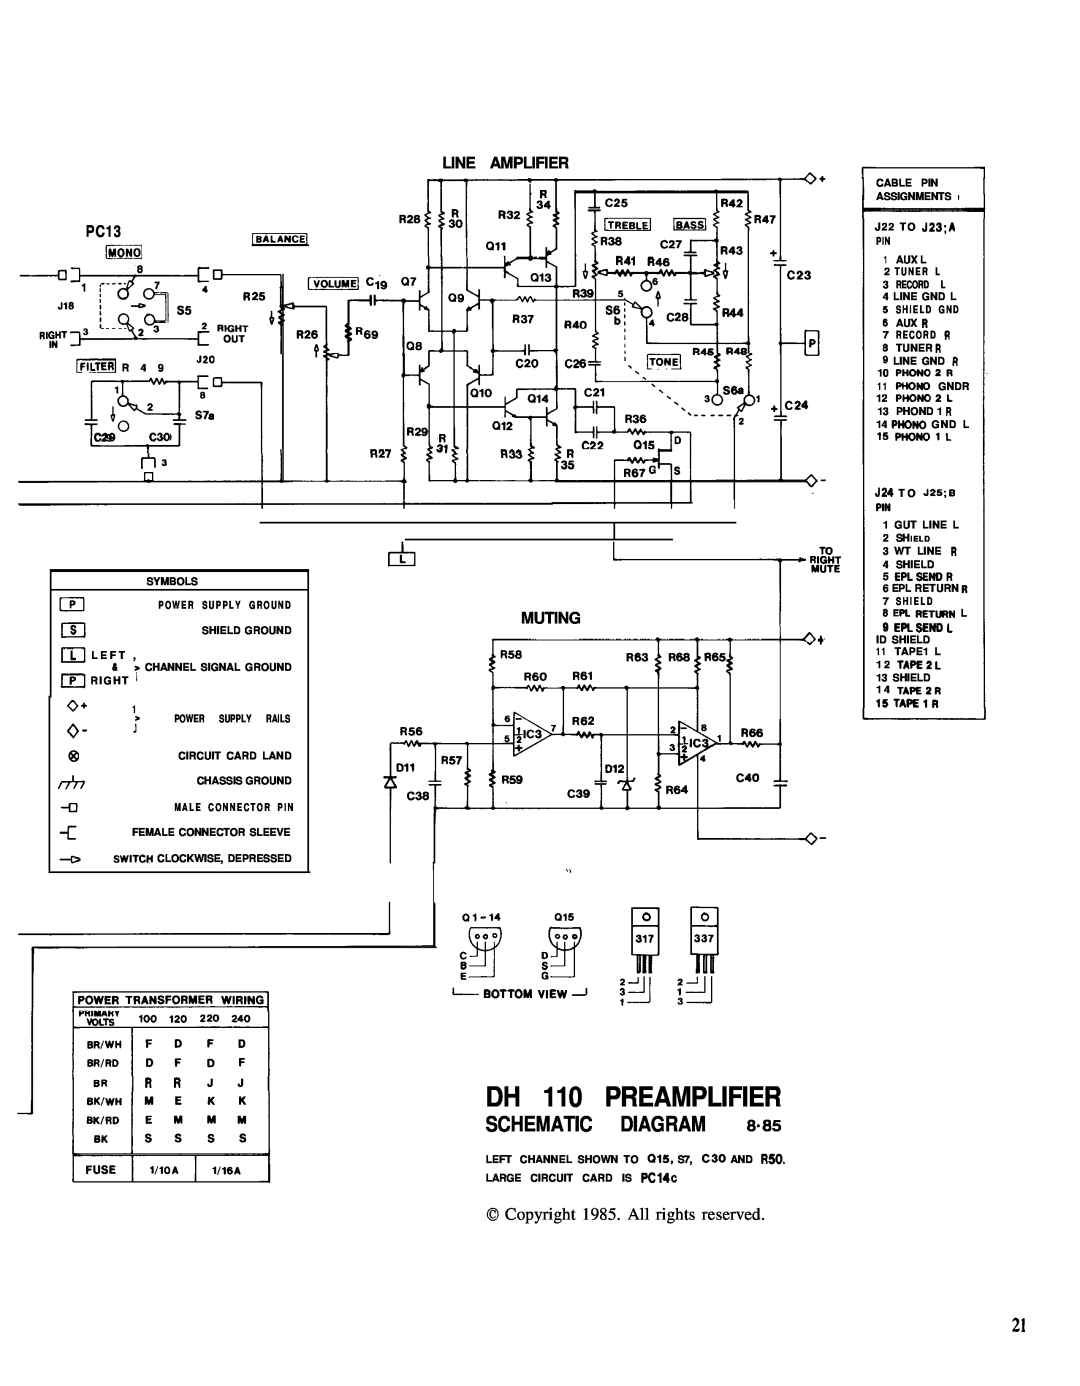 Hafler DH-110 manual Schematic Diagram, DH 110 PREAMPLIFIER, l75y7q, PC13IB*LINCE lYONOl 